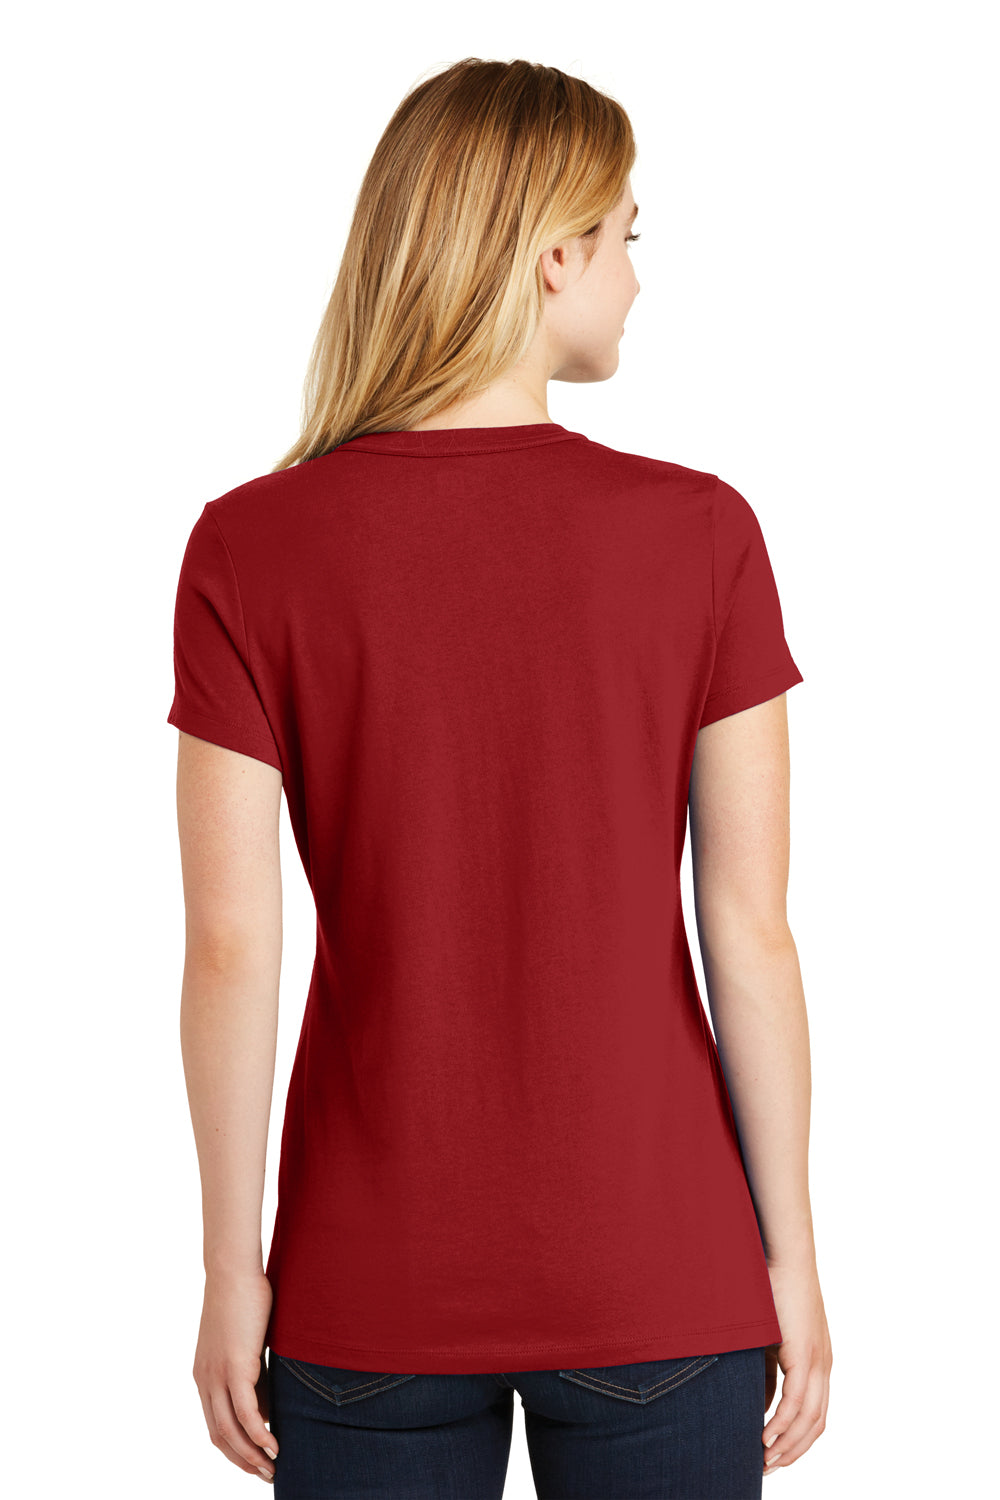 New Era LNEA100 Womens Heritage Short Sleeve Crewneck T-Shirt Crimson Red Back